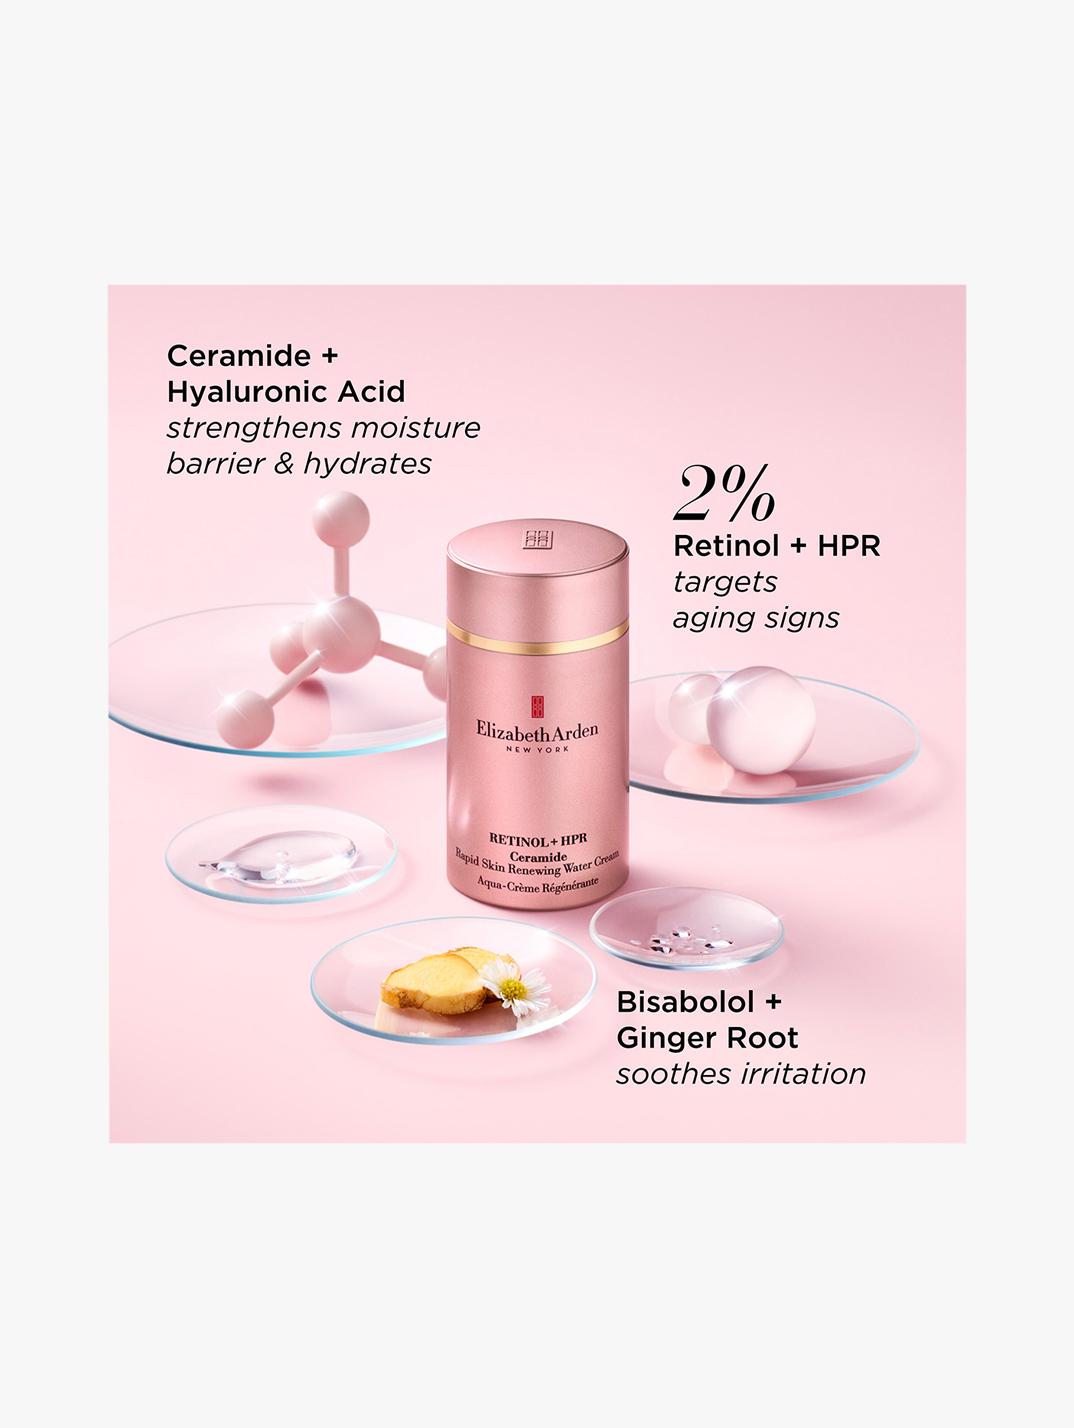 Elizabeth Arden Retinol Ceramide Capsules & Retinol + HPR Cream; Nighttime  Skin Care, Fine Line and Wrinkle Erasing Face Serum, Rapid Skin Renewing